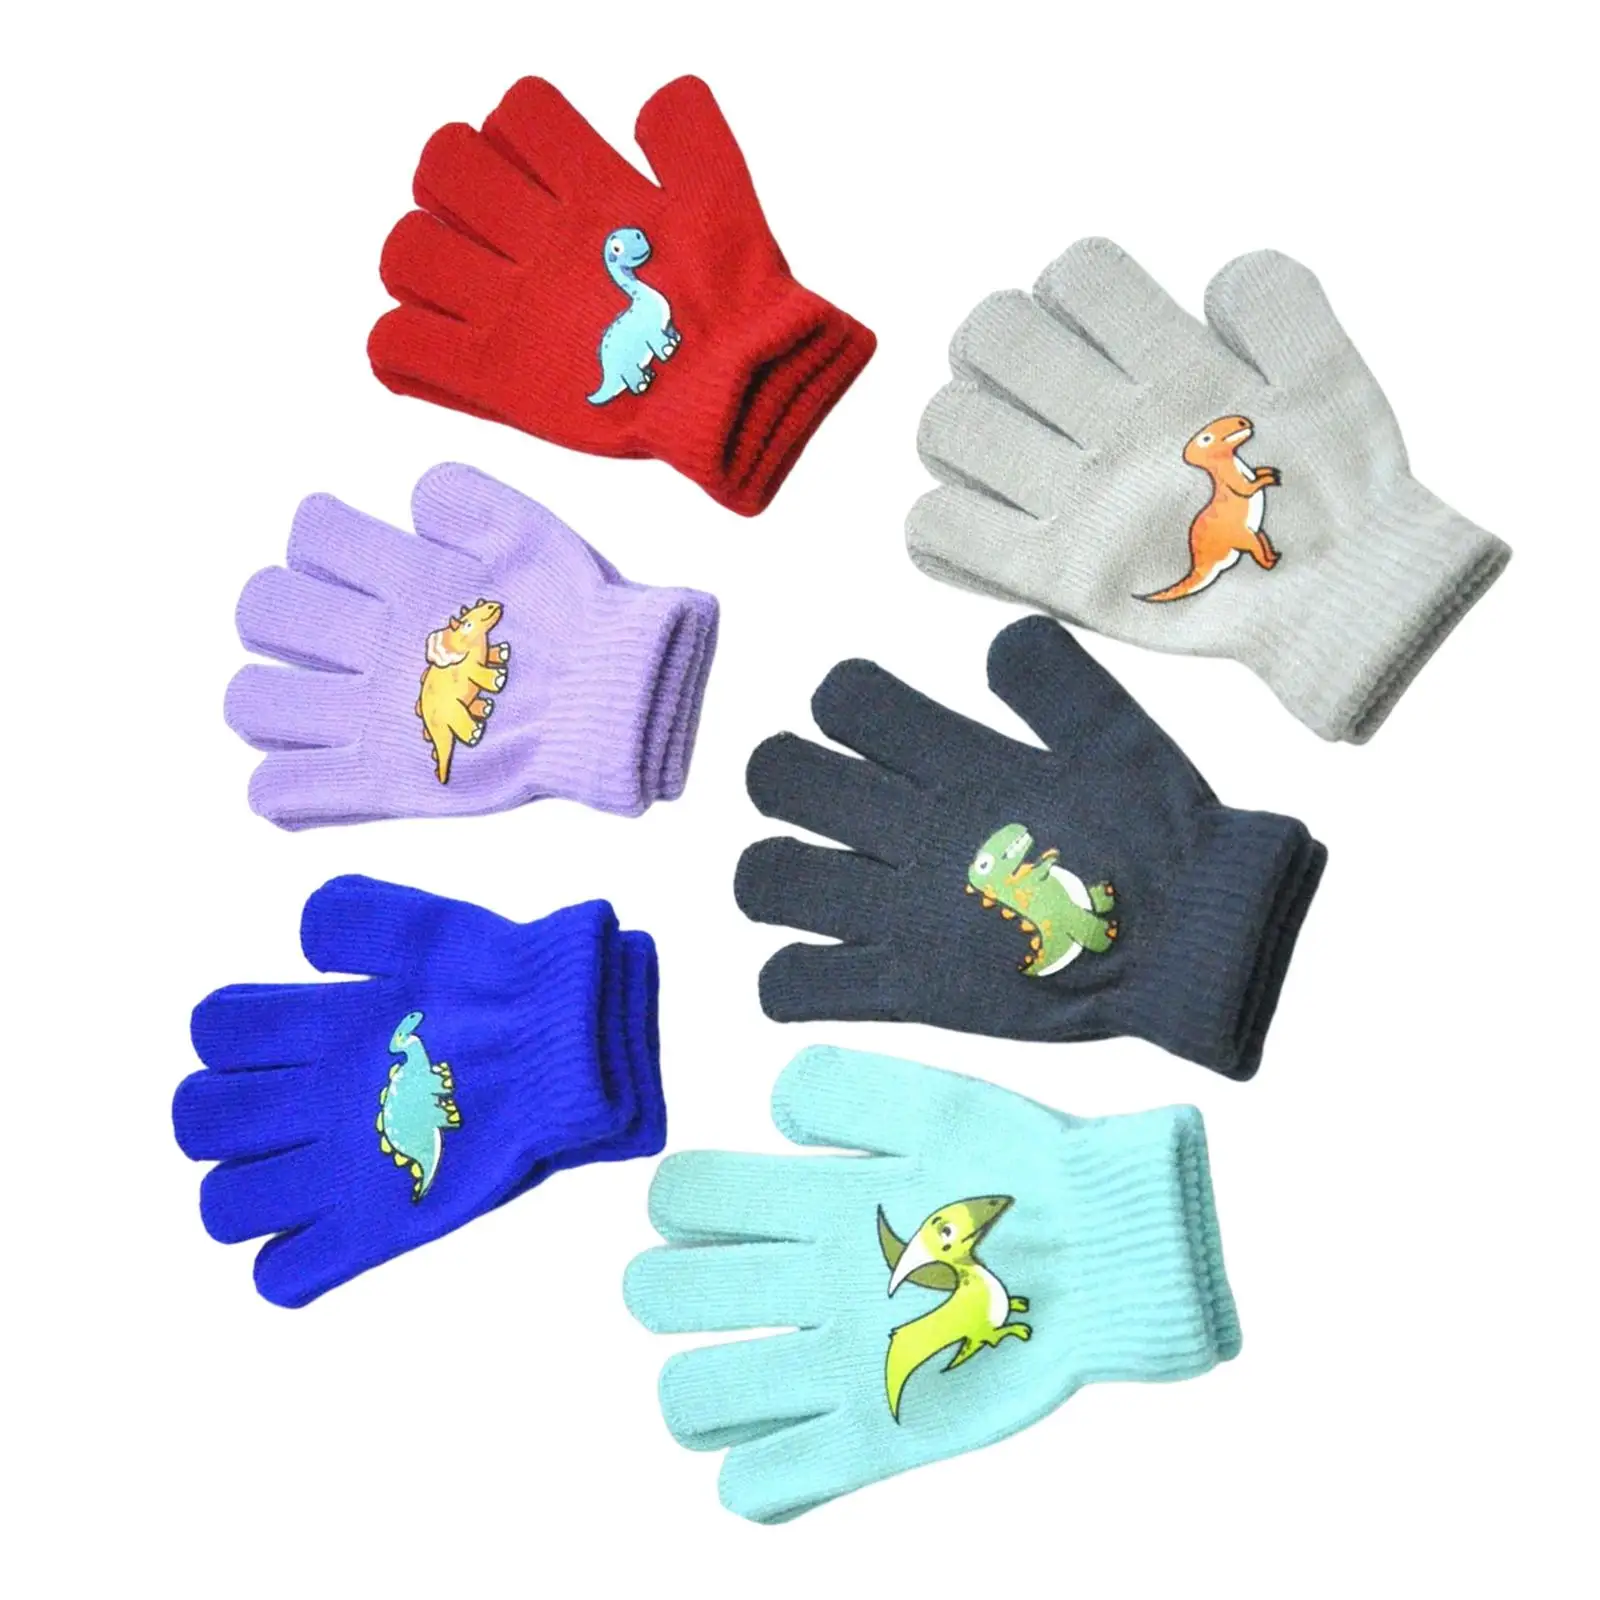 Unisex Kids Gloves Winter Warm Stretchy Full Fingers Mitten Knitted Dinosaur Series Washable for Boys and Girls Toddler Children